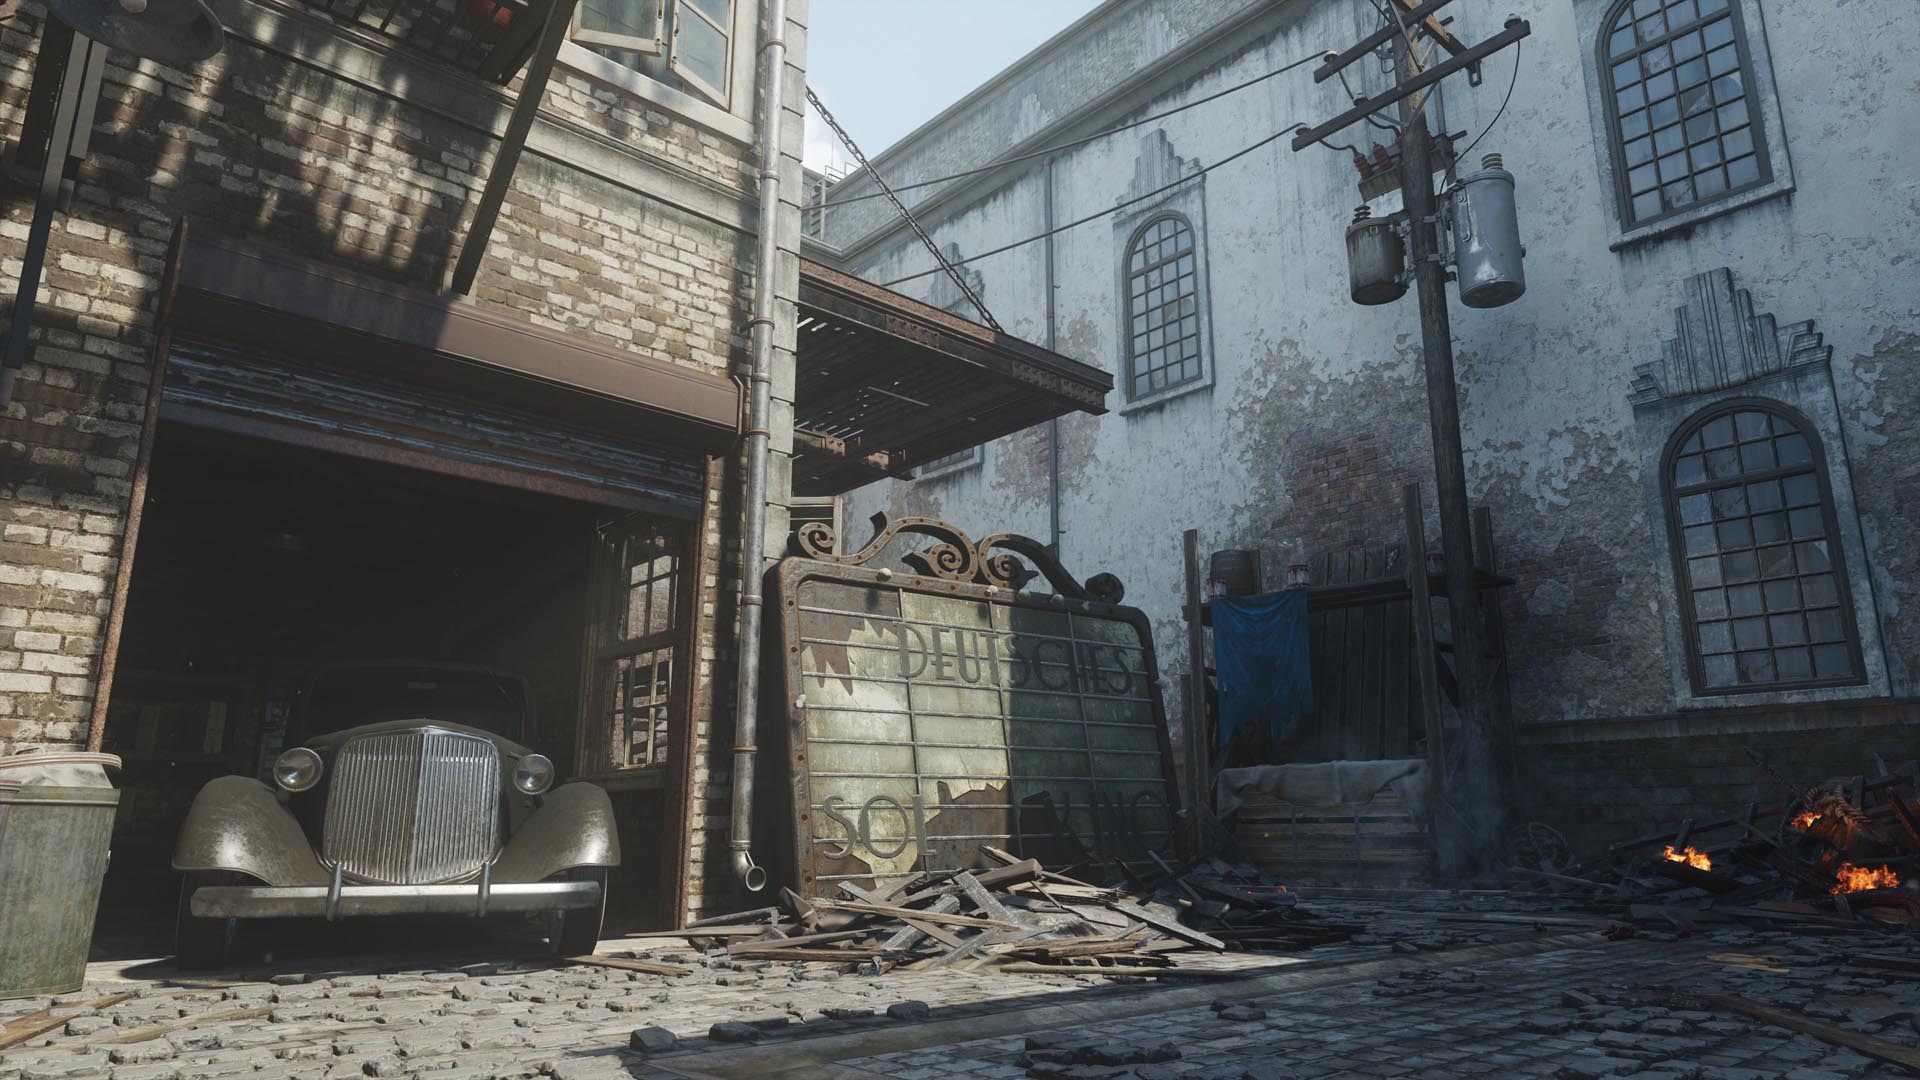 Call of Duty: Black Ops III 3- Edição Zombies Chronicles PS5 MÍDIA DIG -  Raimundogamer midia digital